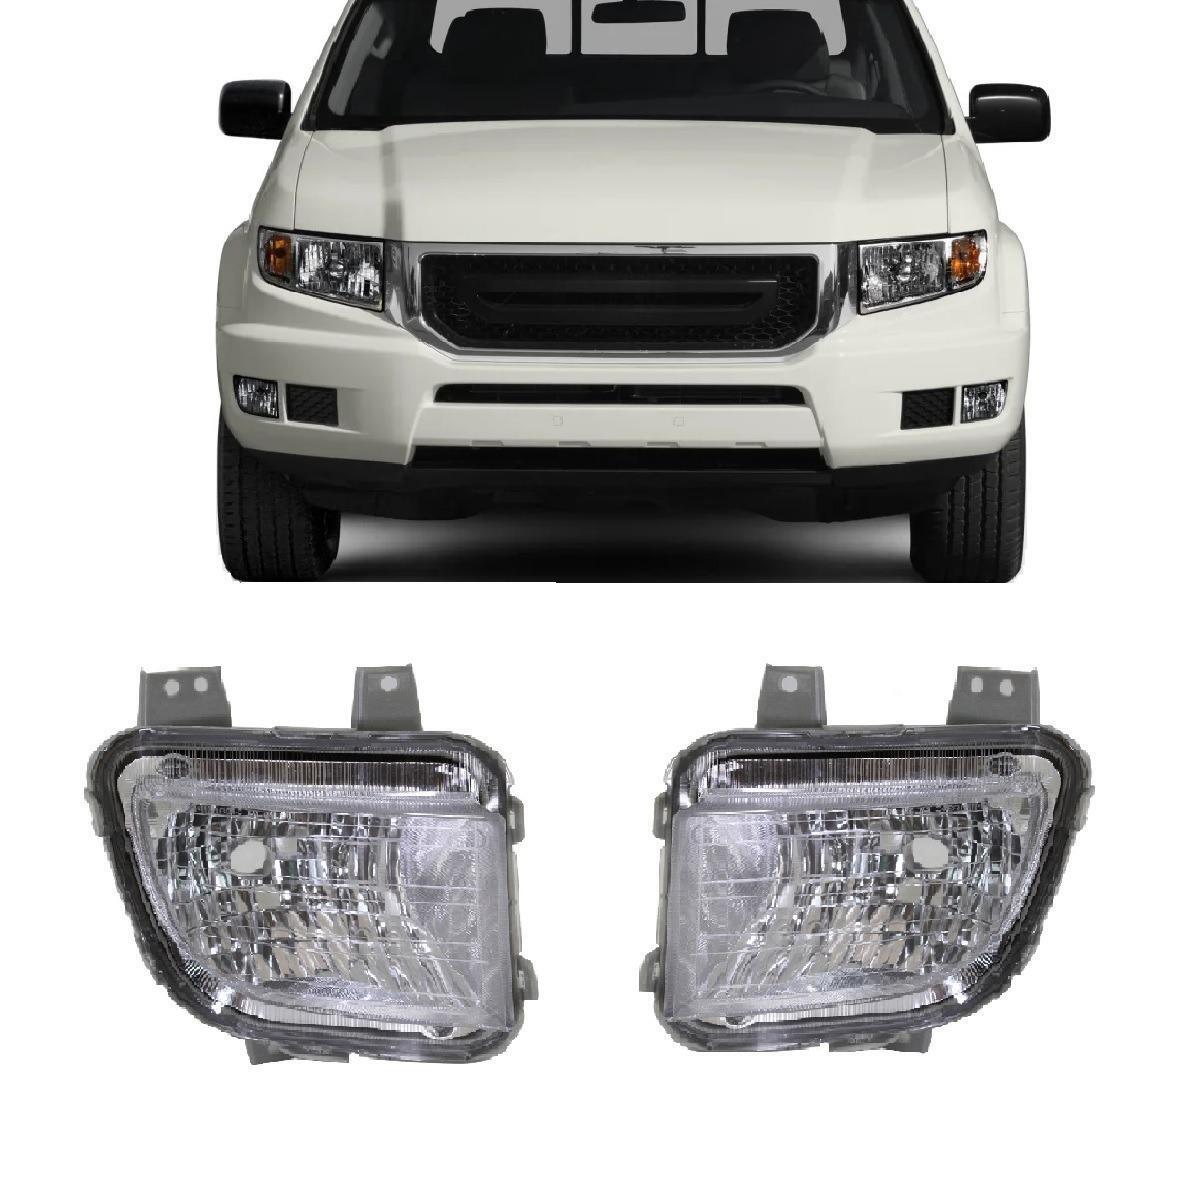 Fits Honda Ridgeline Headlight Driving light 2009-2014 Pair Passenger and Driver